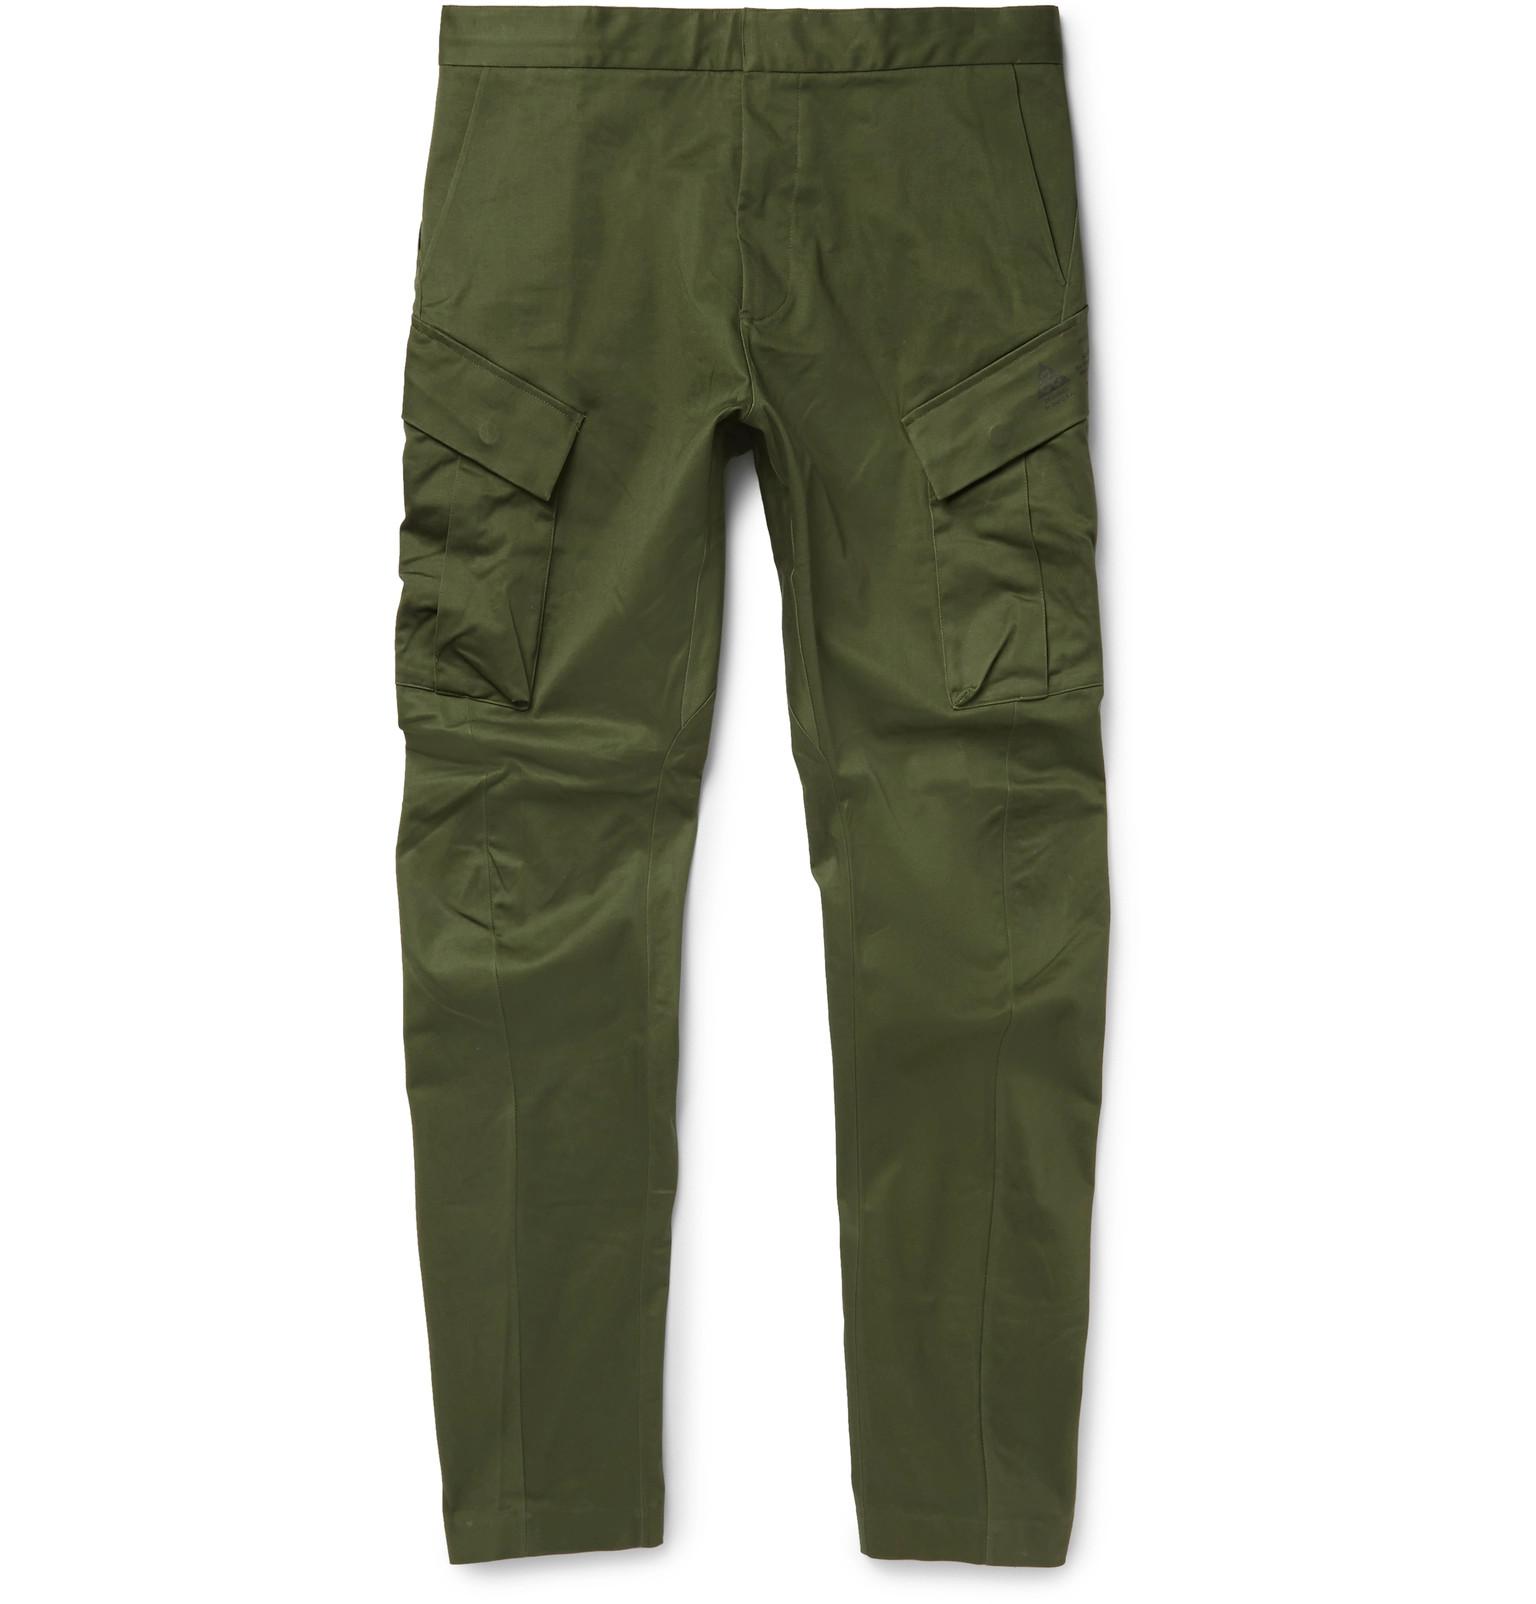 nike cargo pants green